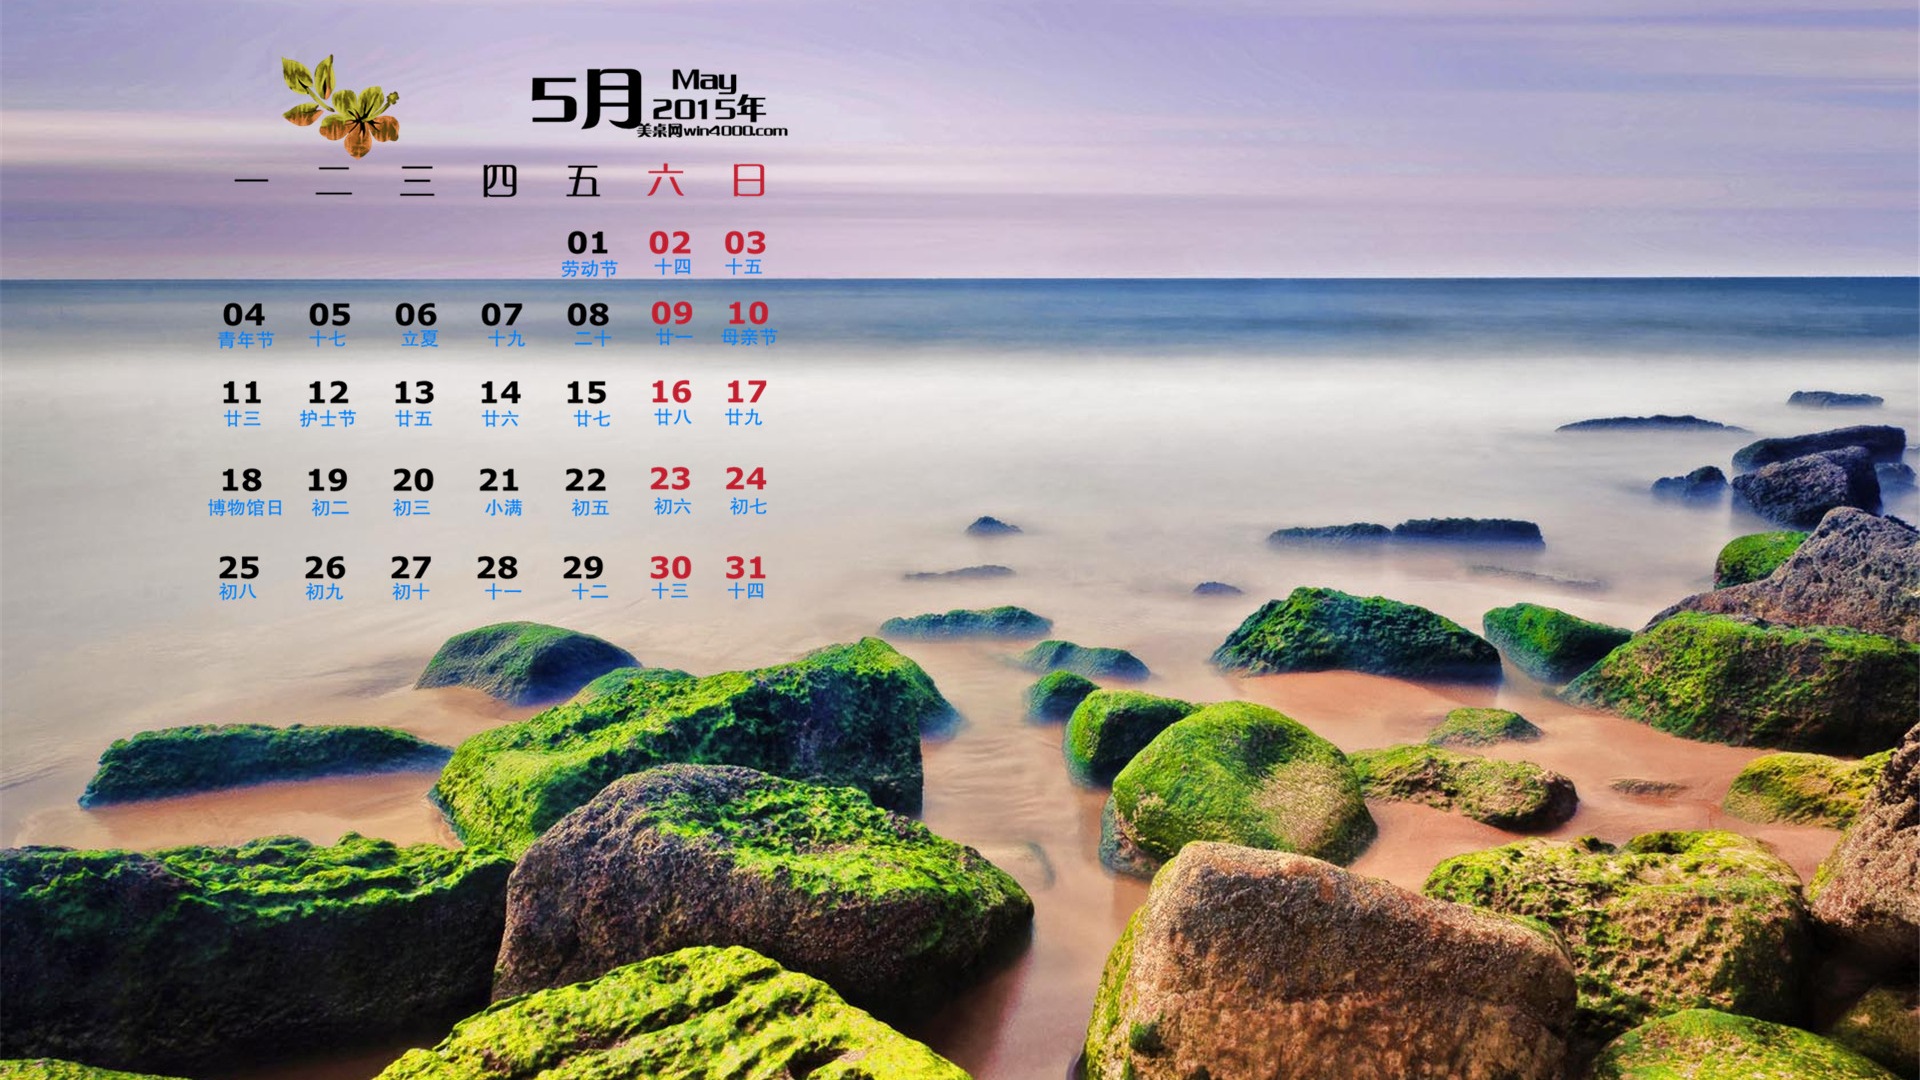 Mai 2015 calendar fond d'écran (1) #2 - 1920x1080